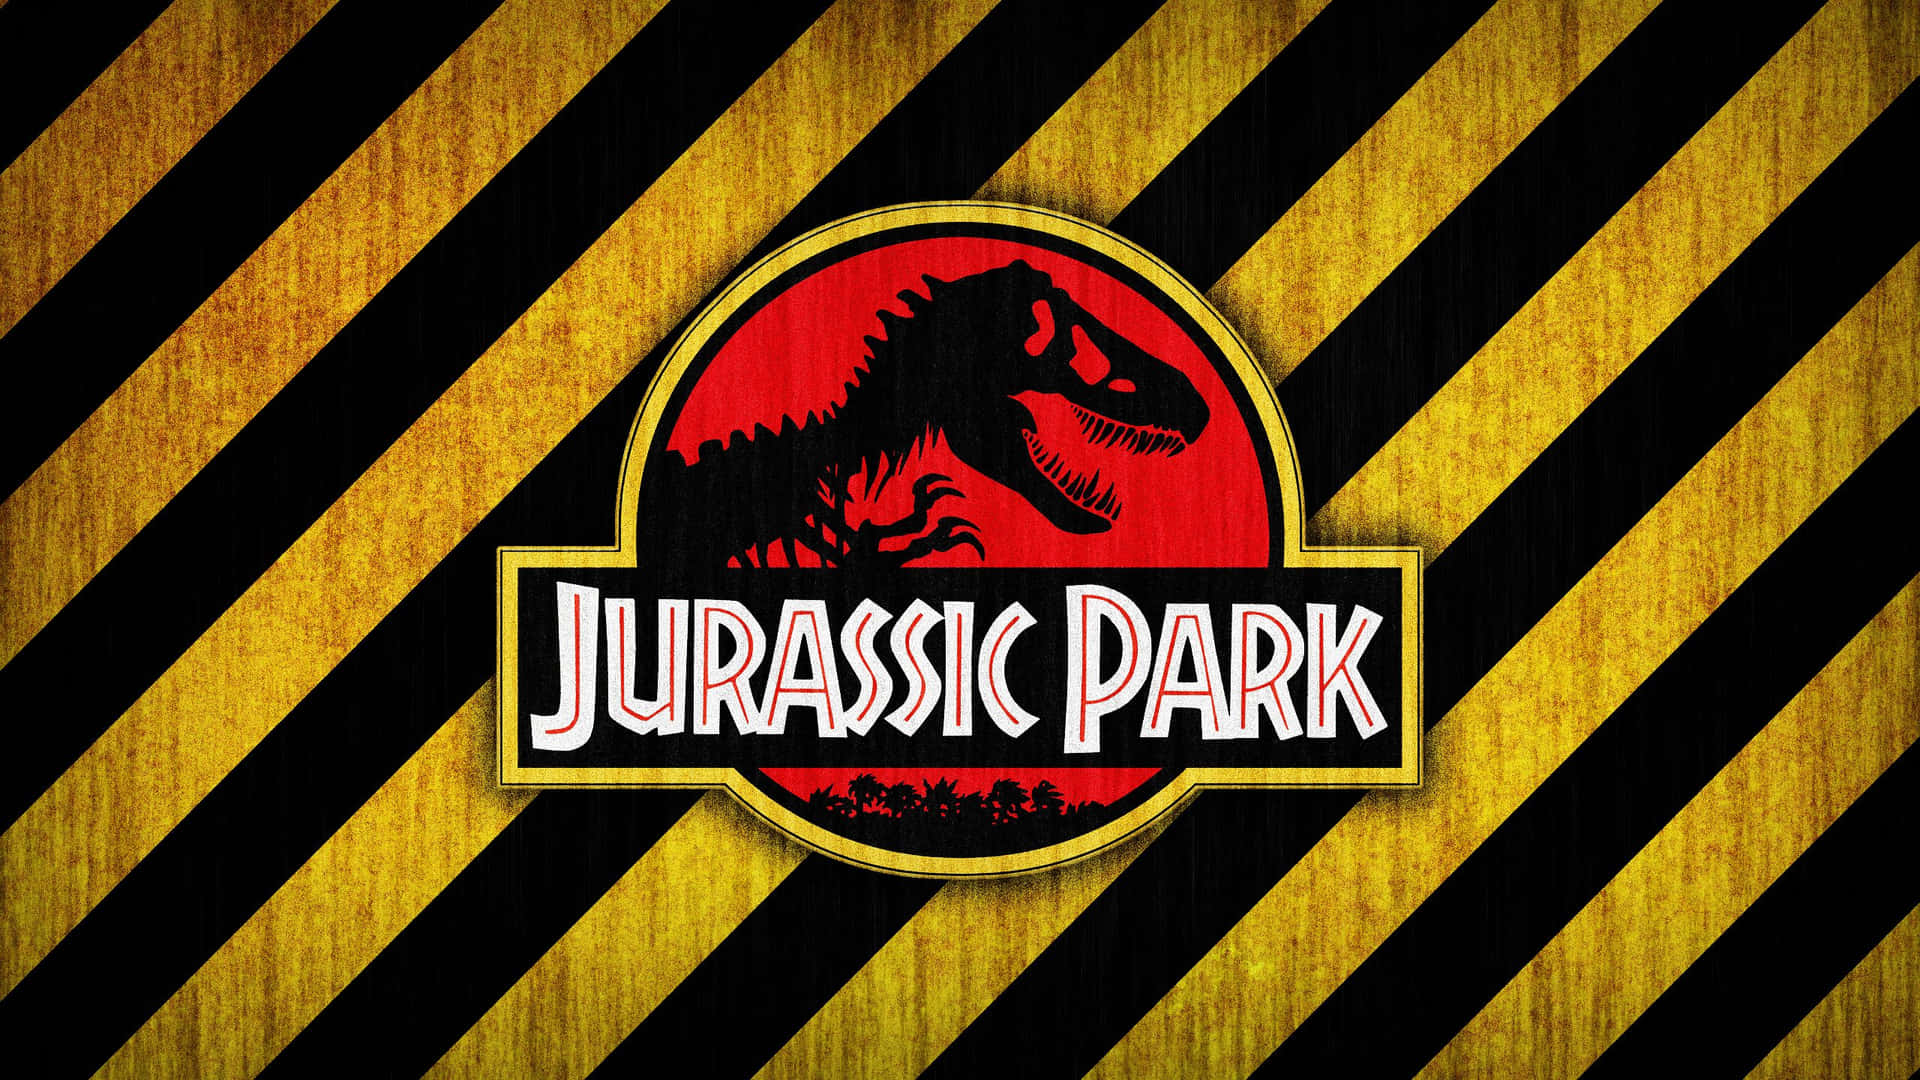 Experience the prehistoric world of Jurassic Park